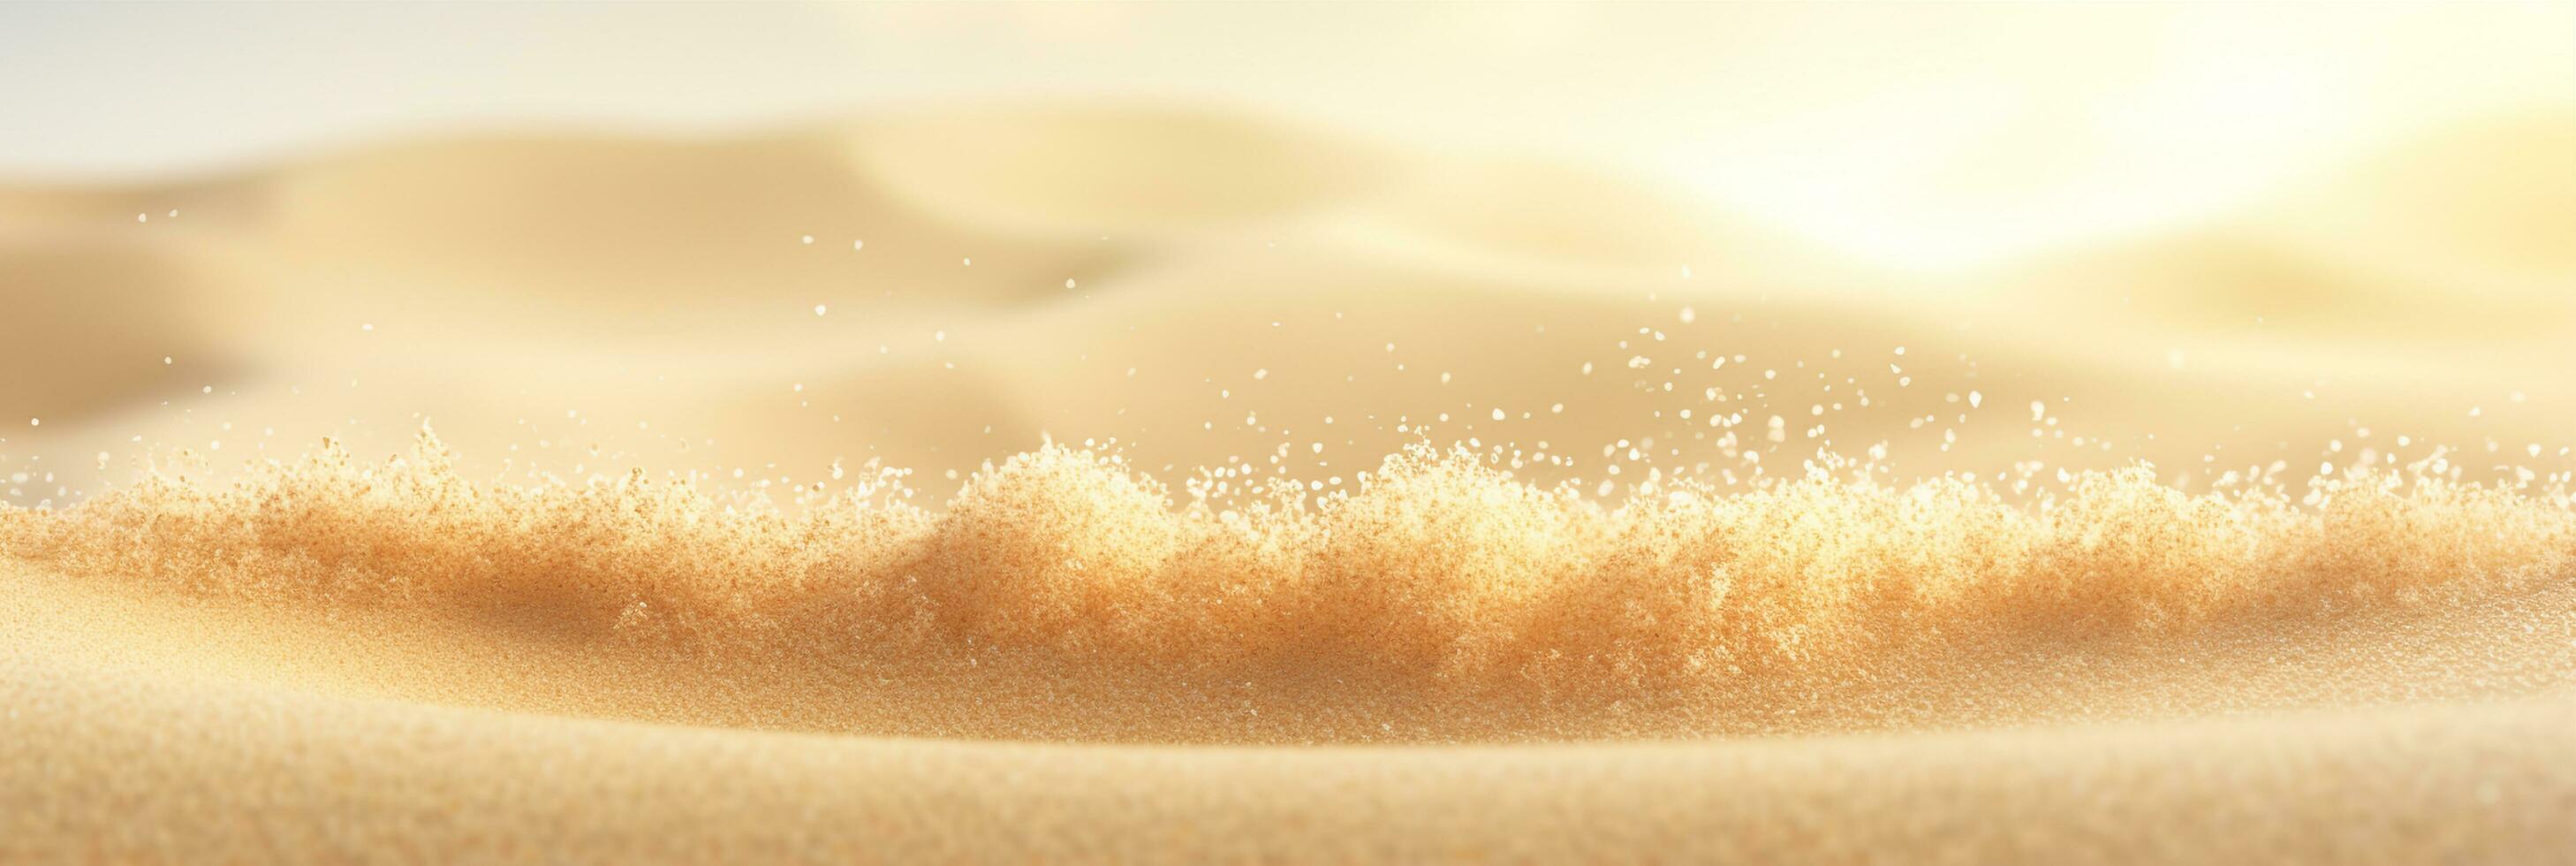 playa antecedentes arena antecedentes grano de arena antecedentes el Desierto antecedentes ai generado foto